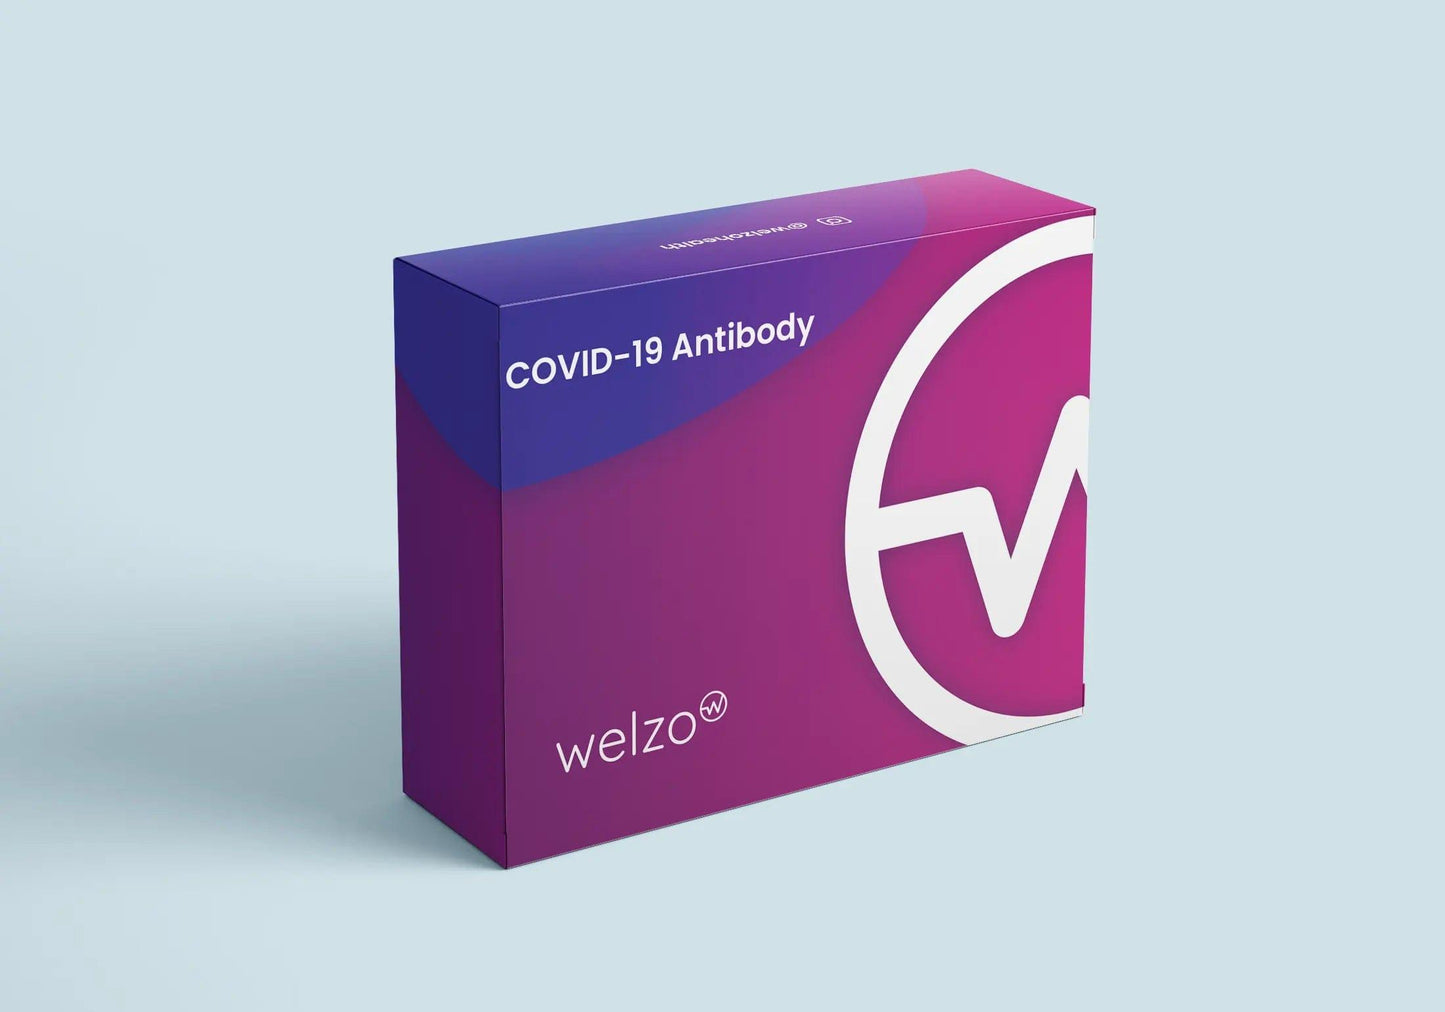 COVID-19 Antibody Blood Test - welzo